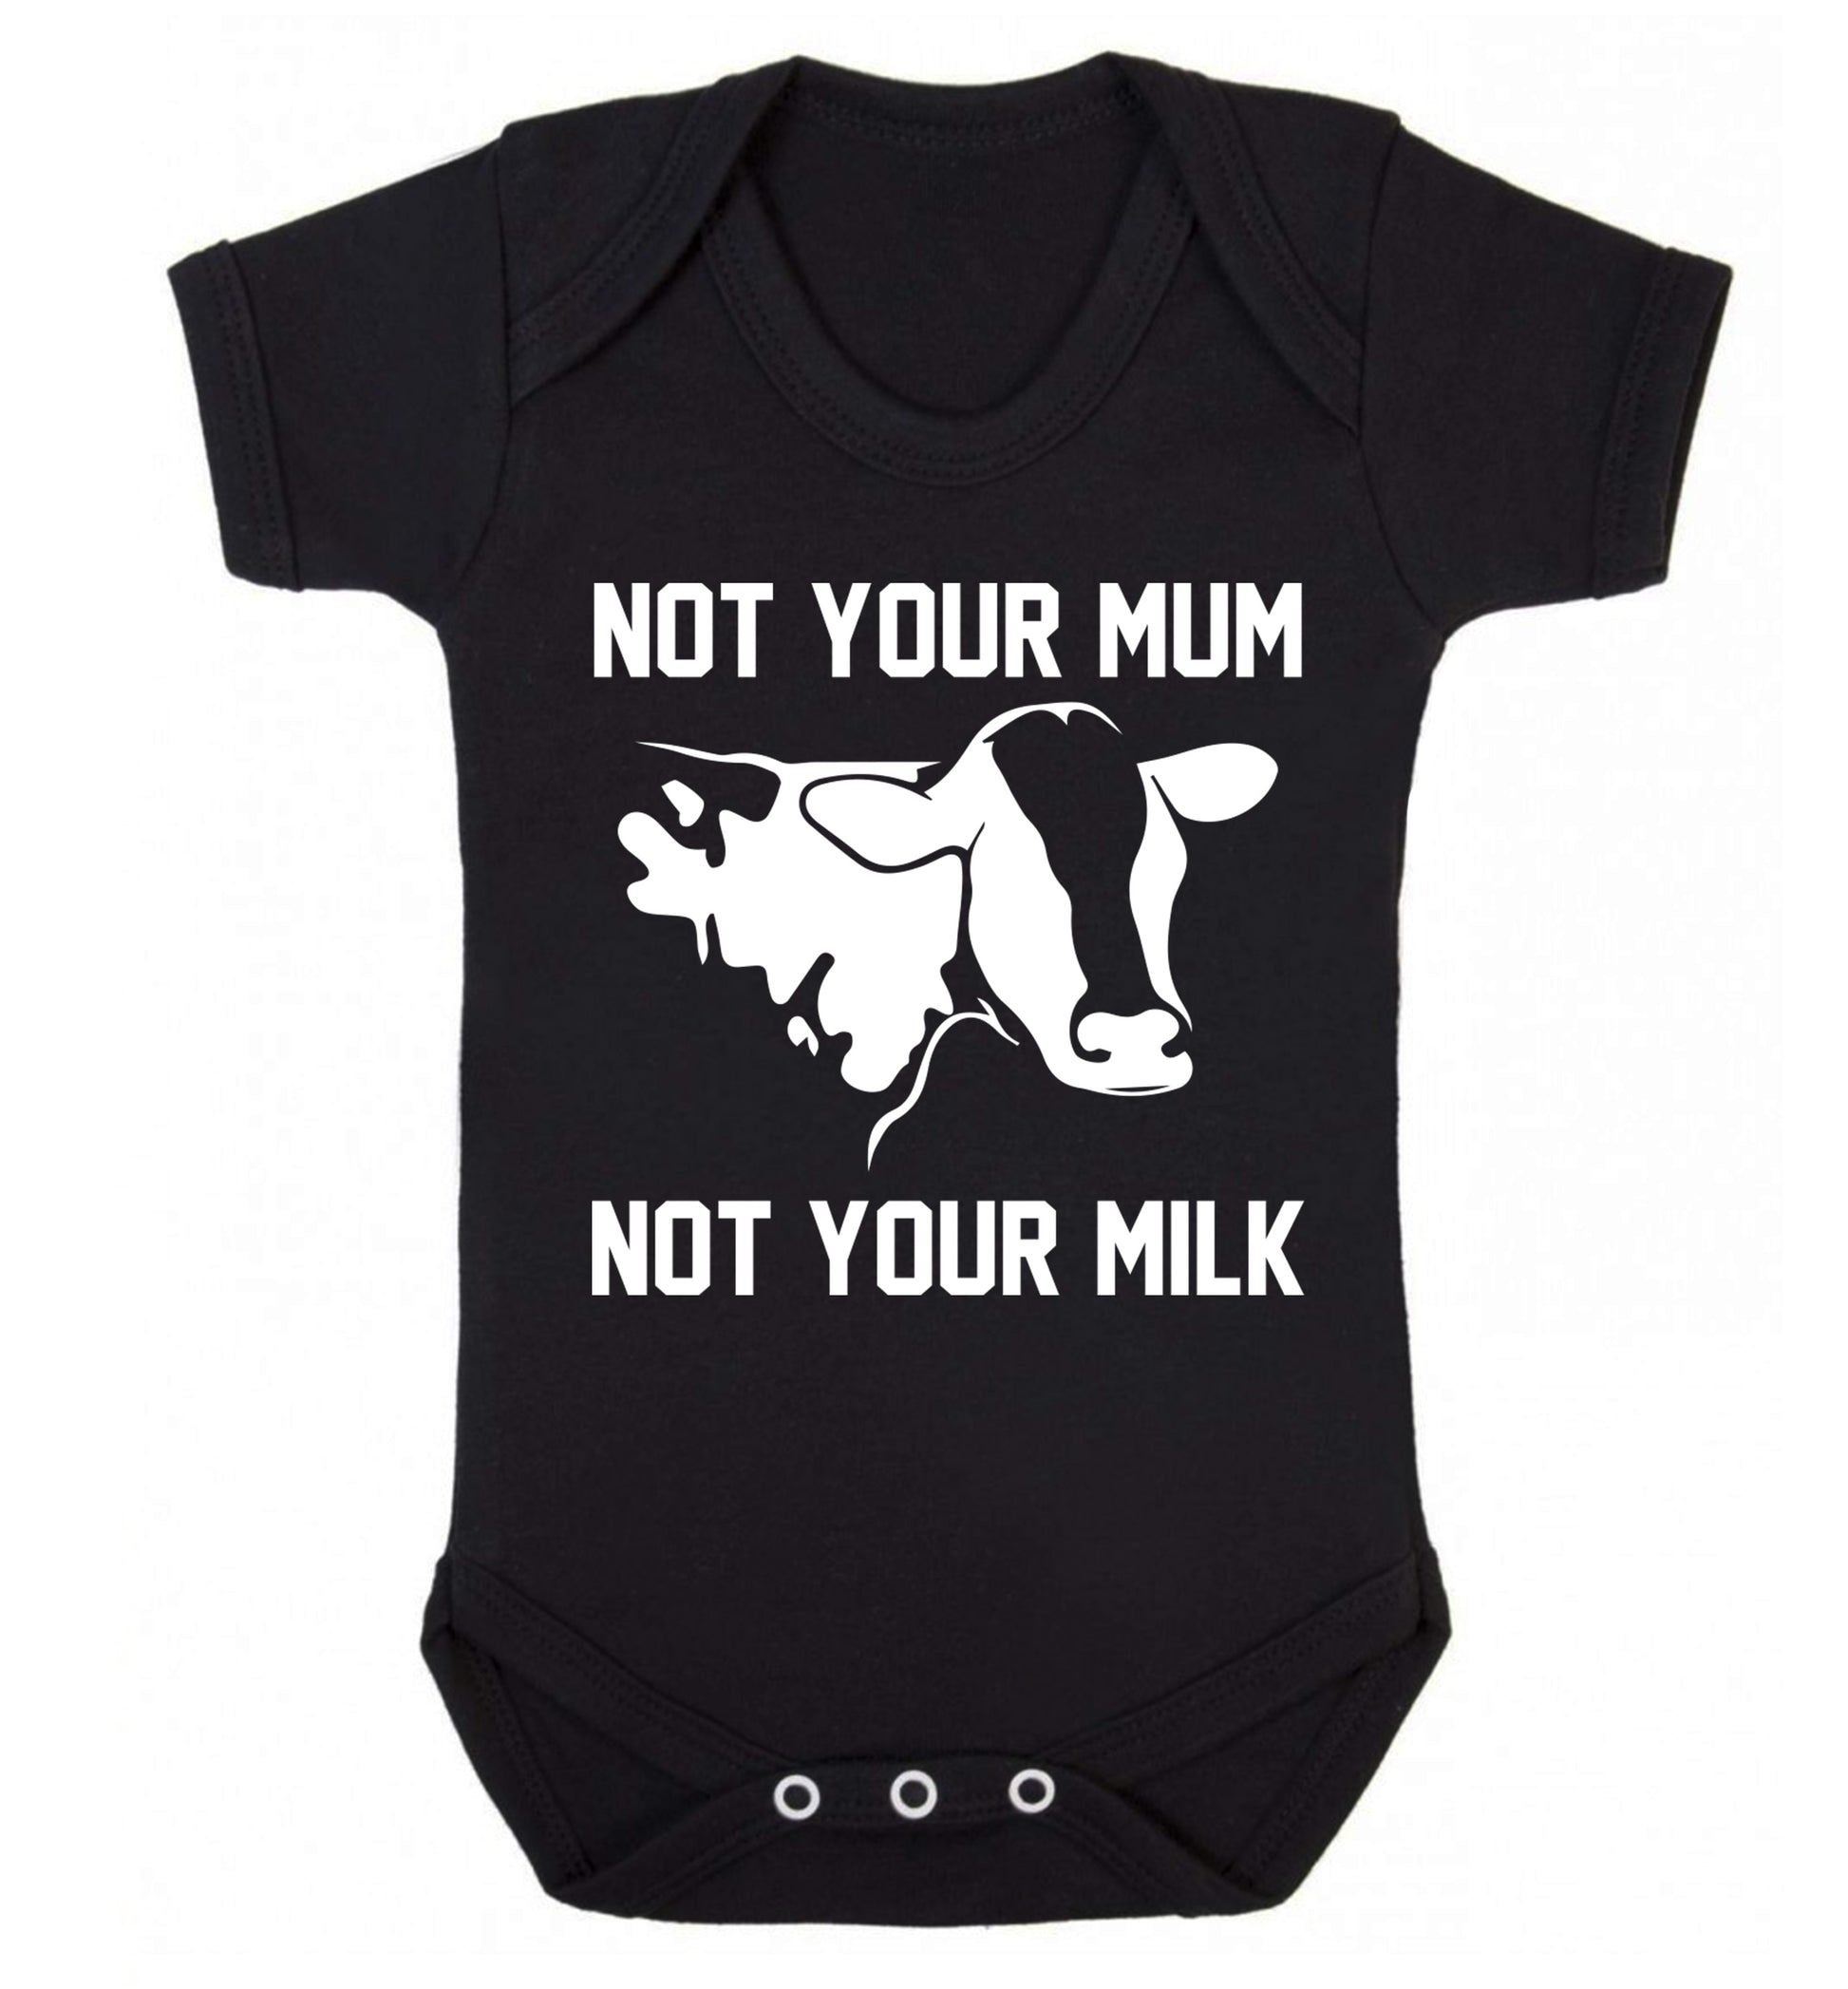 Not your mum not your milk Baby Vest black 18-24 months